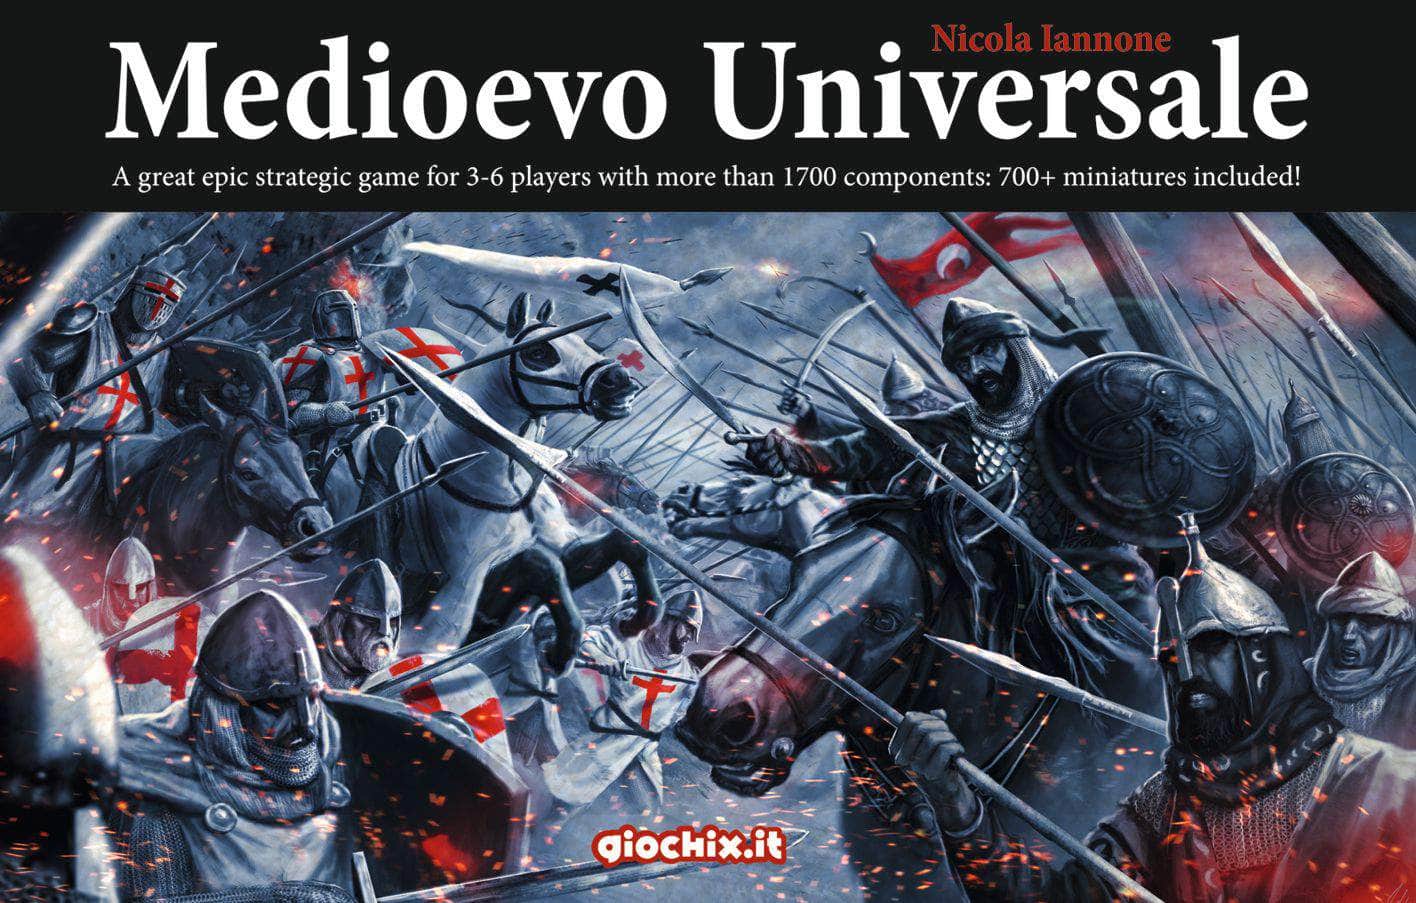 Medioevo Universale (Kickstarter Special) Kickstarter Board Game Giochix.it KS800610A